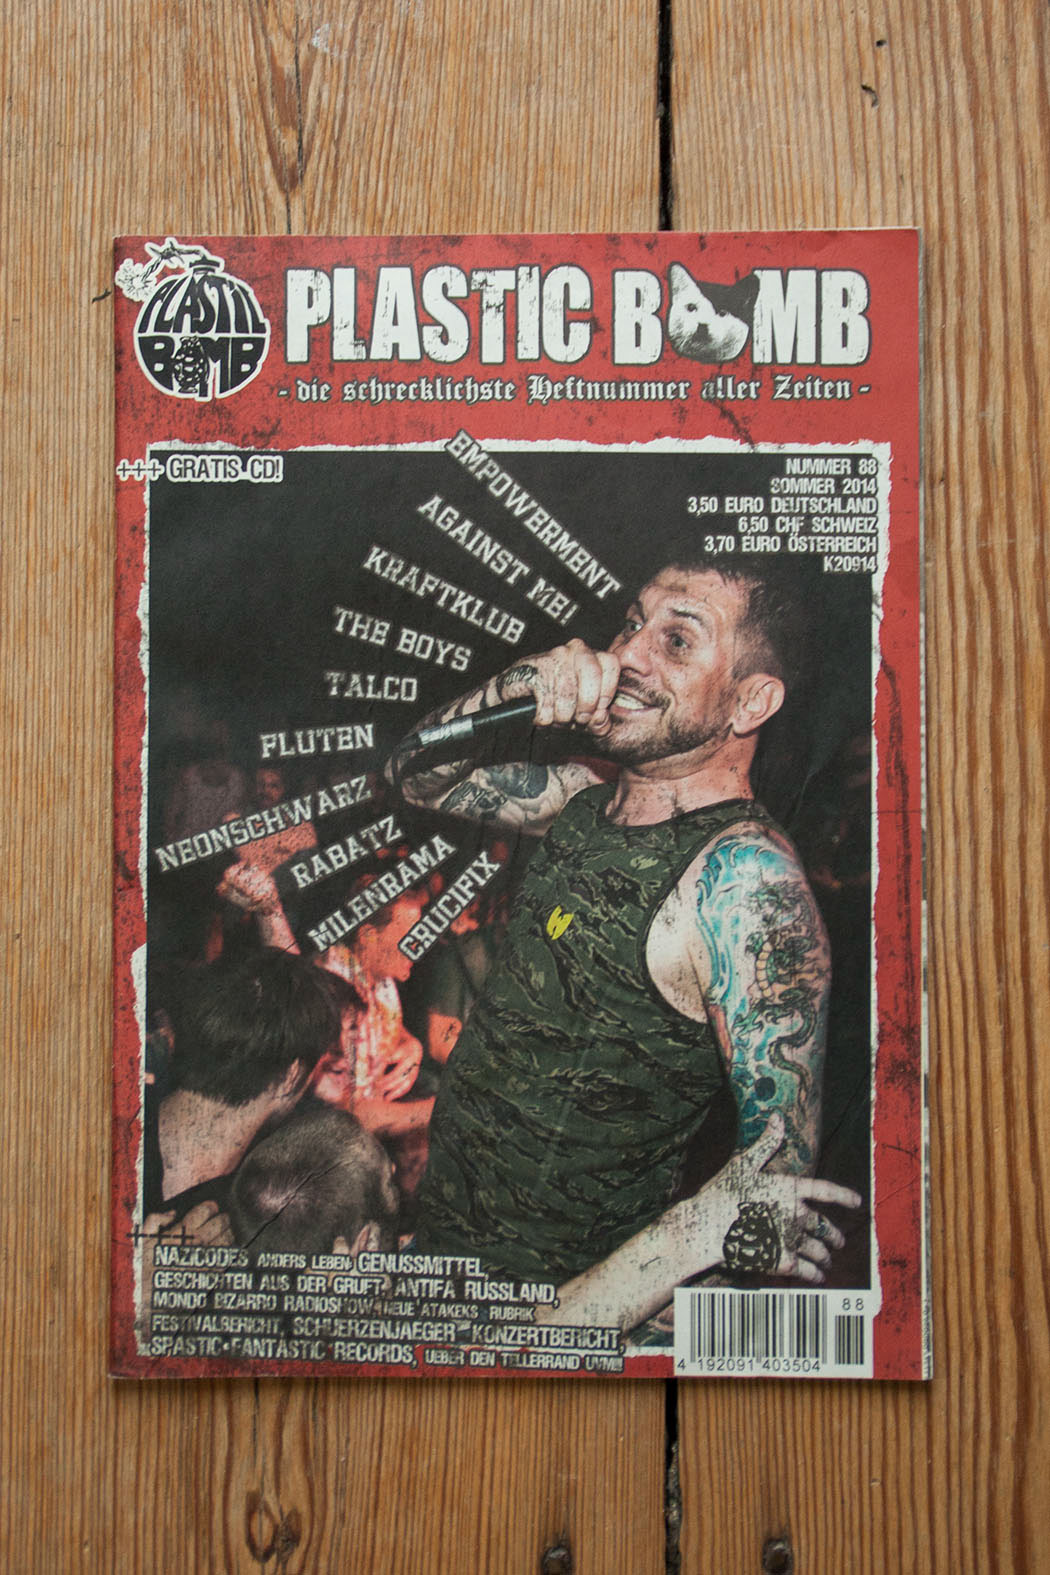 Plasticbomb editorial cover punkrock trash